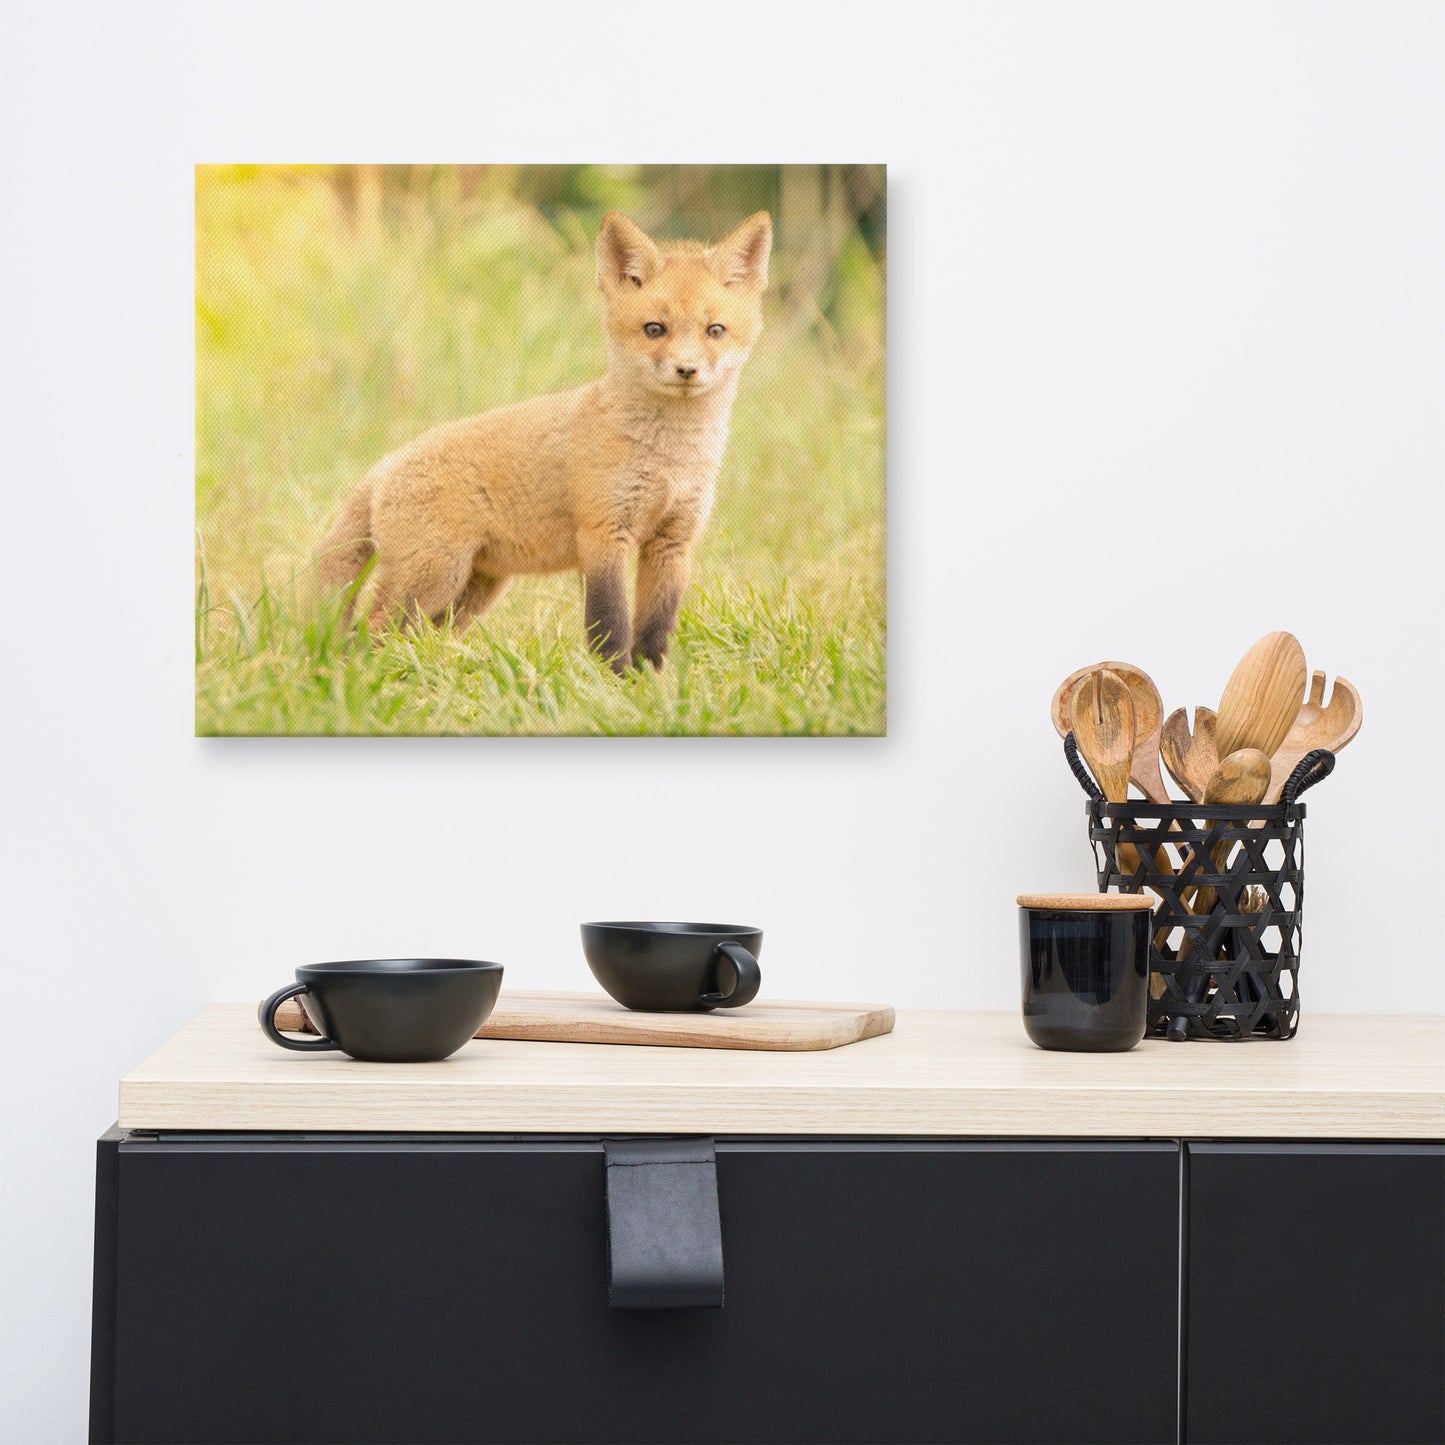 Nursery Wall Canvas: Baby Red Fox in the Sun Animal / Wildlife / Nature Photograph Canvas Wall Art Print - Artwork